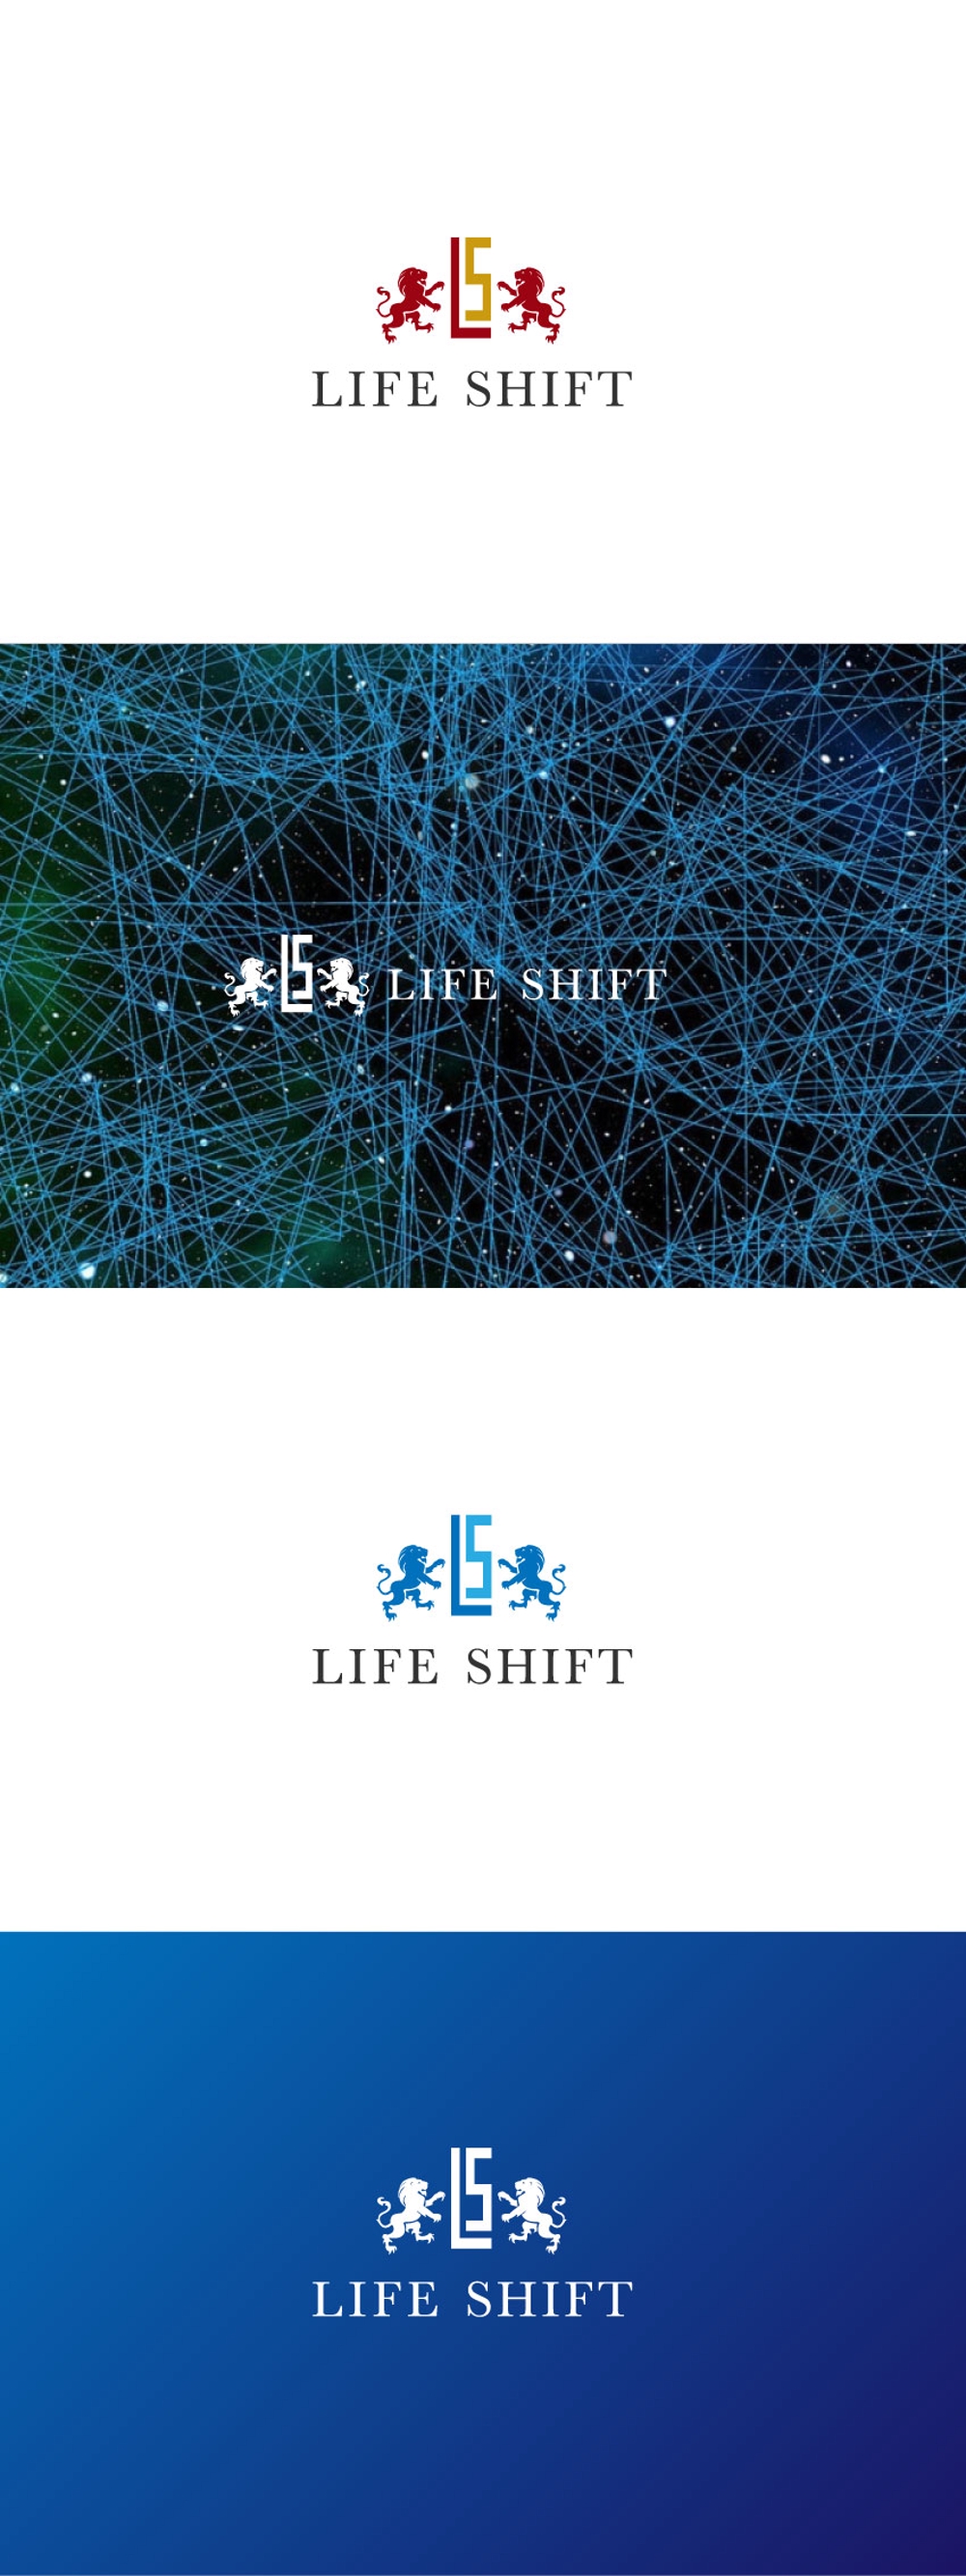 LIFE-SHIFT-06.jpg